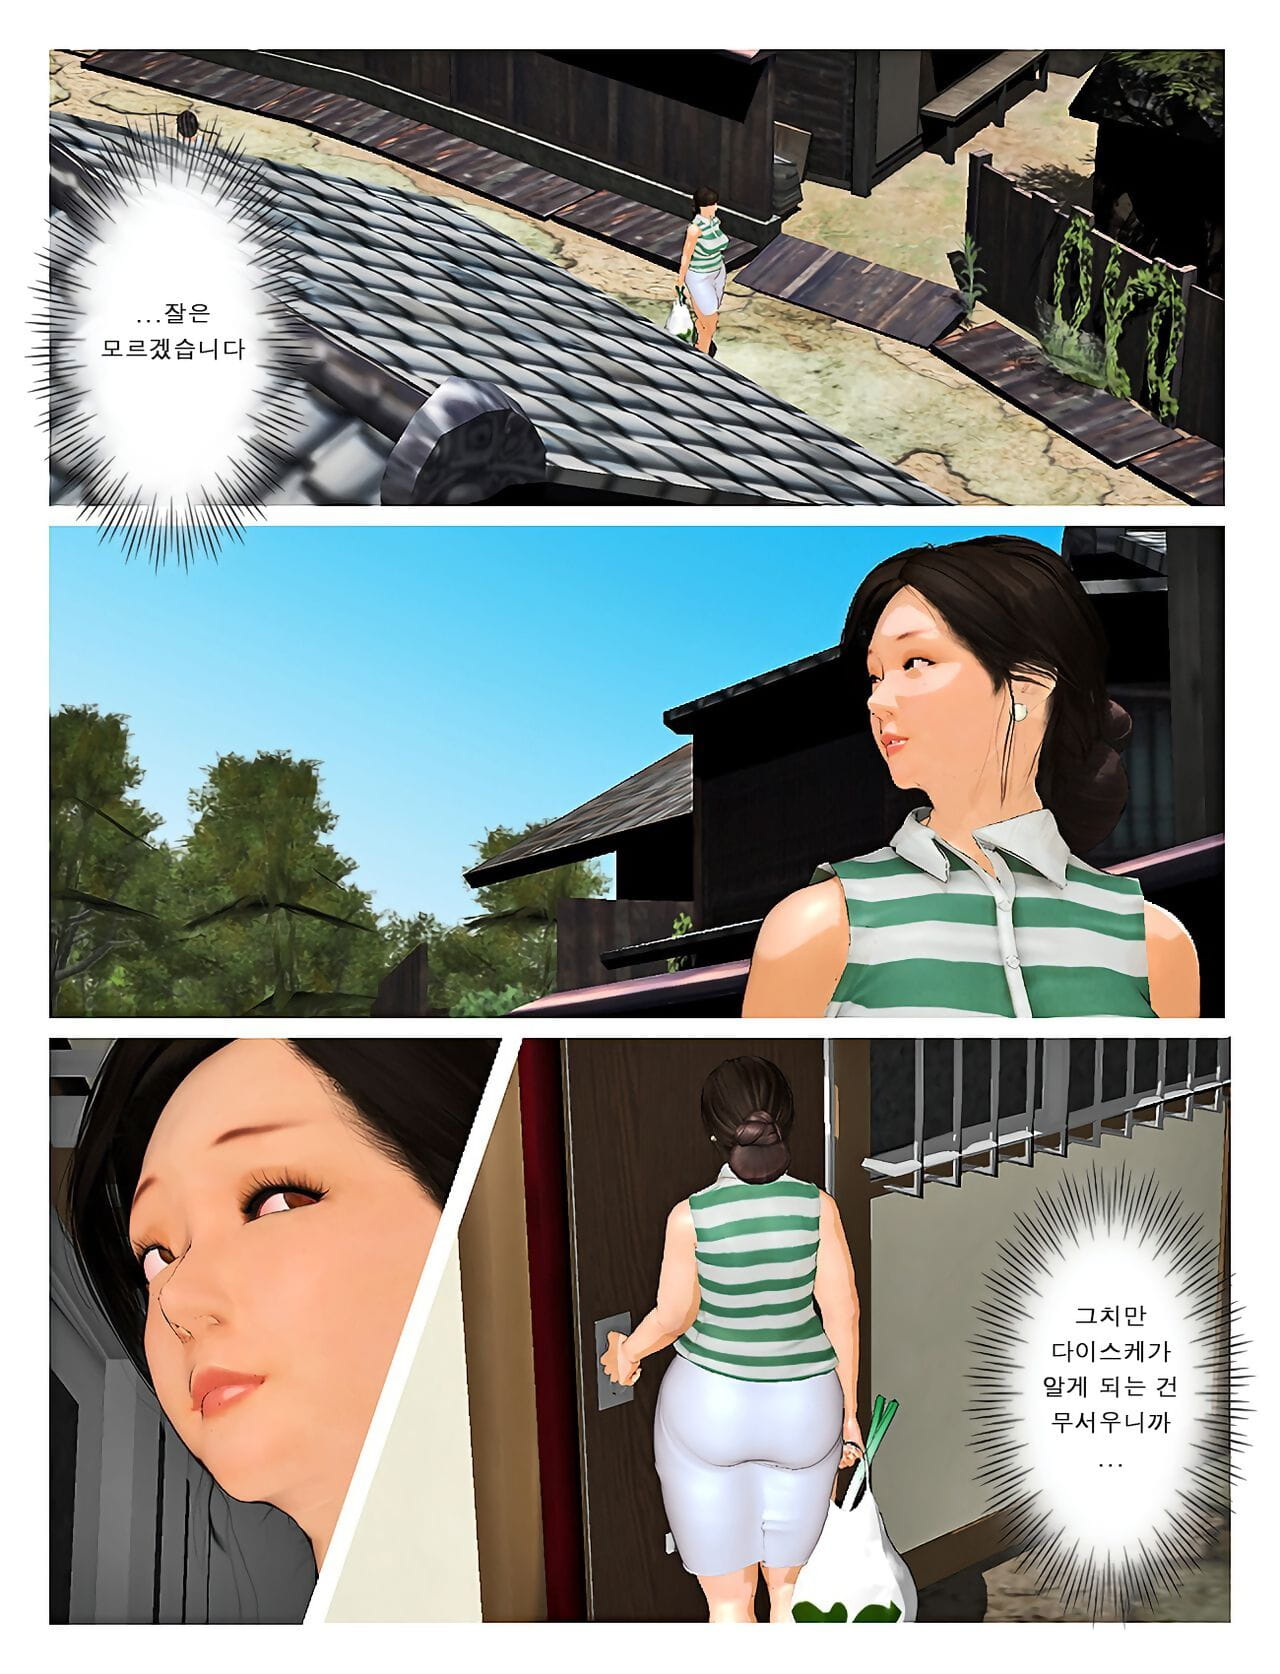 kyou geen misako san 2019:3 오늘의 미사코씨 2019:3 page 1